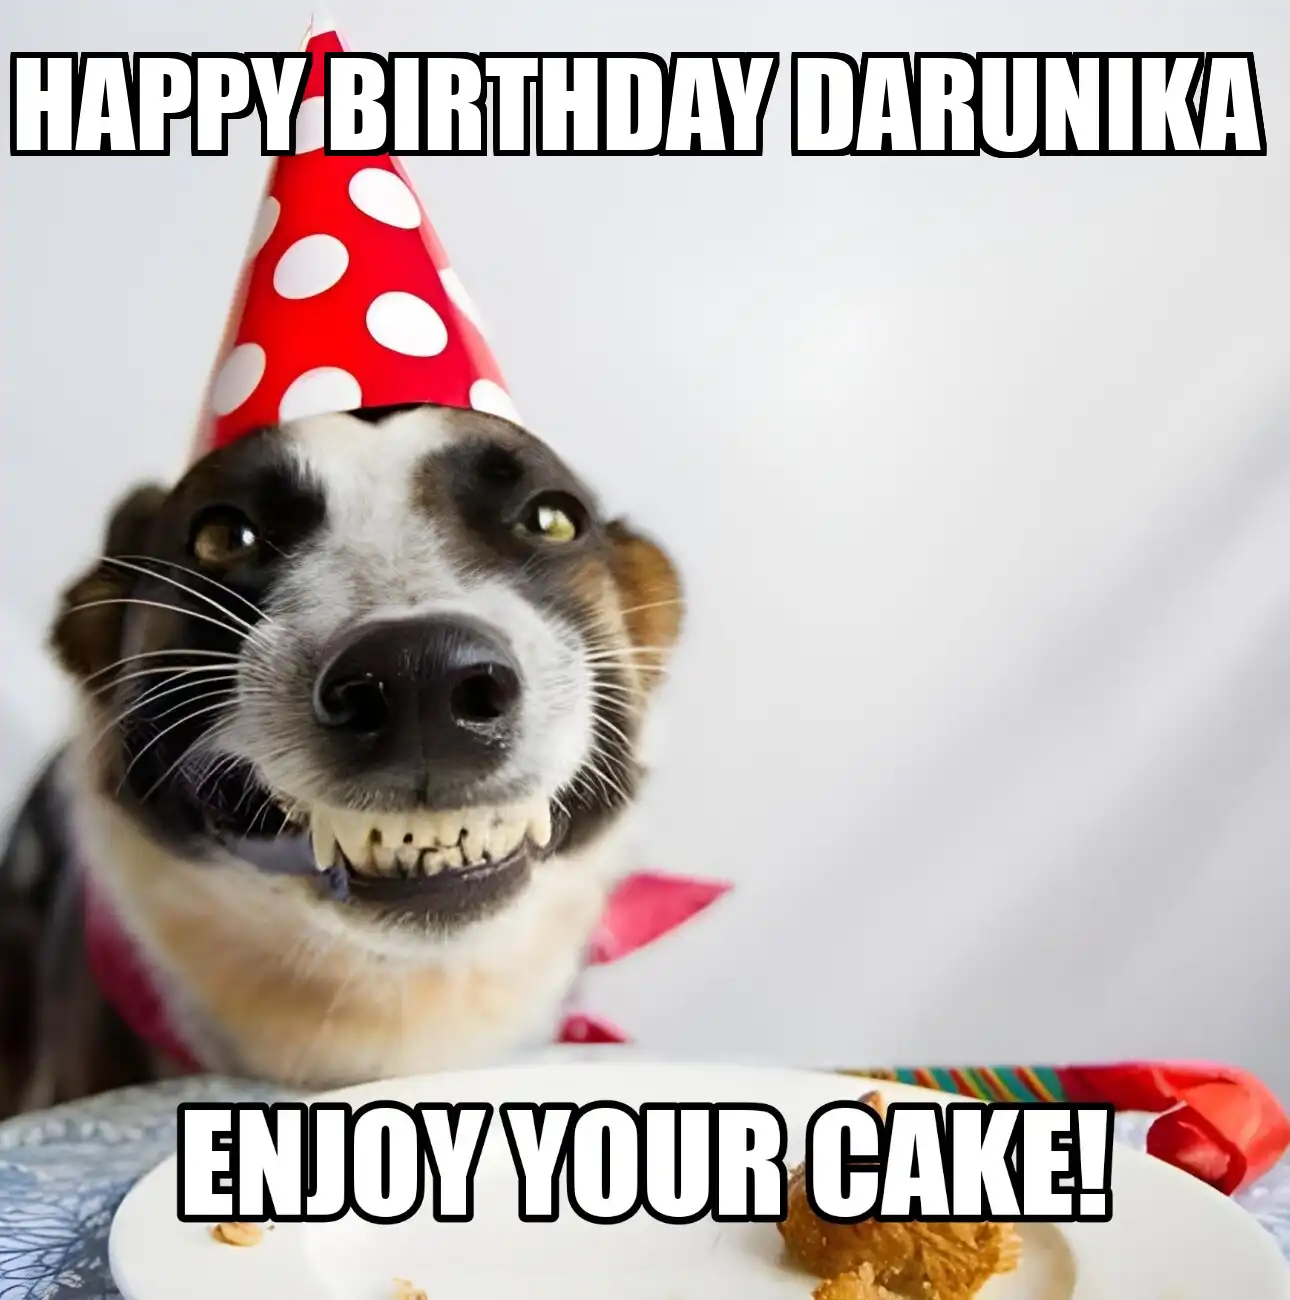 Happy Birthday Darunika Enjoy Your Cake Dog Meme